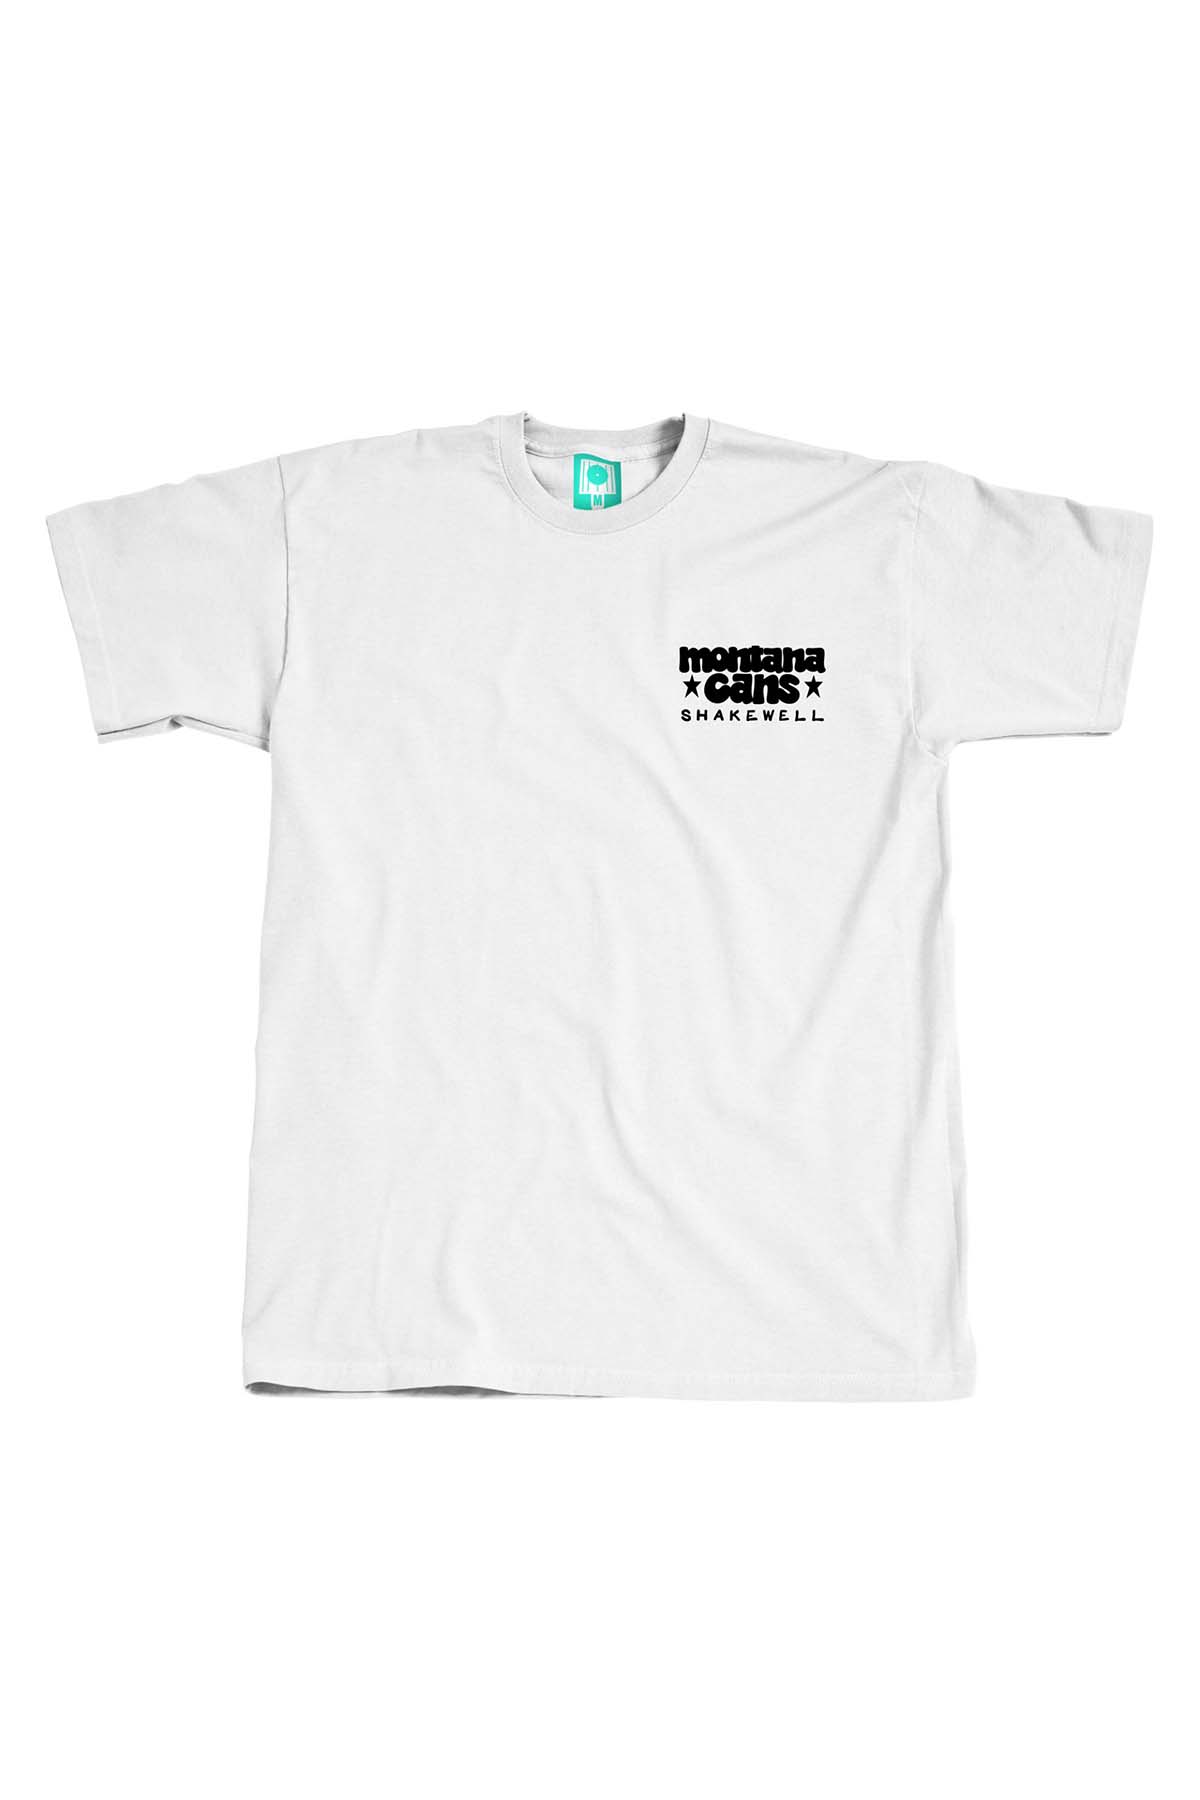 Montana MC White T-Shirt by Tres